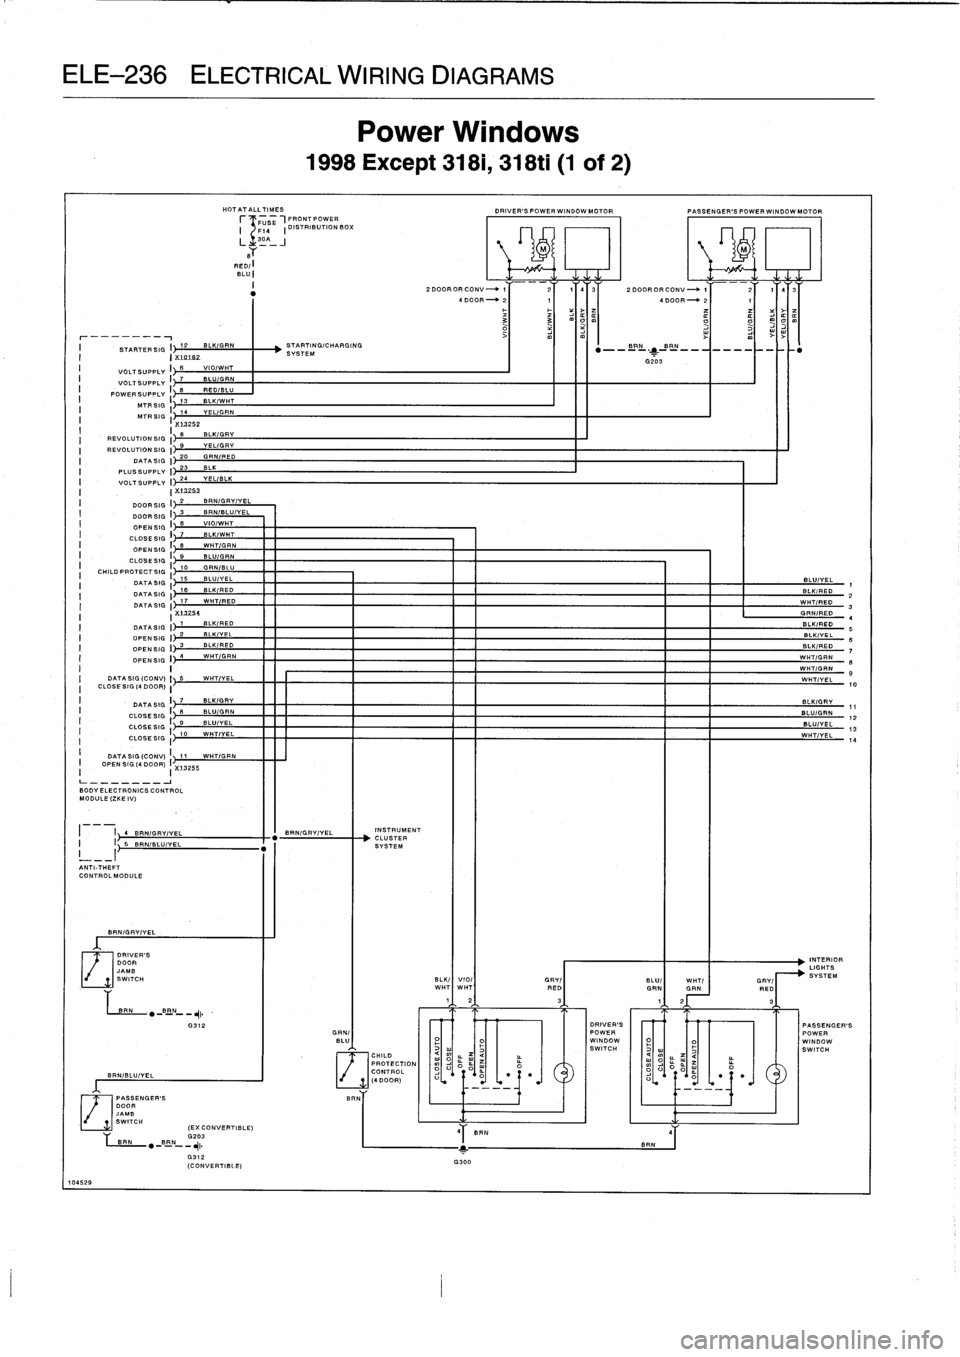 BMW 323i 1993 E36 Workshop Manual 
ELE-236
ELECTRICAL
WIRING
DIAGRAMS

HOTATALLTIMES
f
-
-T
USE
-1FRONTPOWER
F14

	

I
DISTRIBUTION
BOX

RED/
:
BLU
:

I

	

STARTERSIG
I
12

	

BLKIGRN

	

STARTING/CHARGING
I

	

I
X
10182

	

SYSTEM
